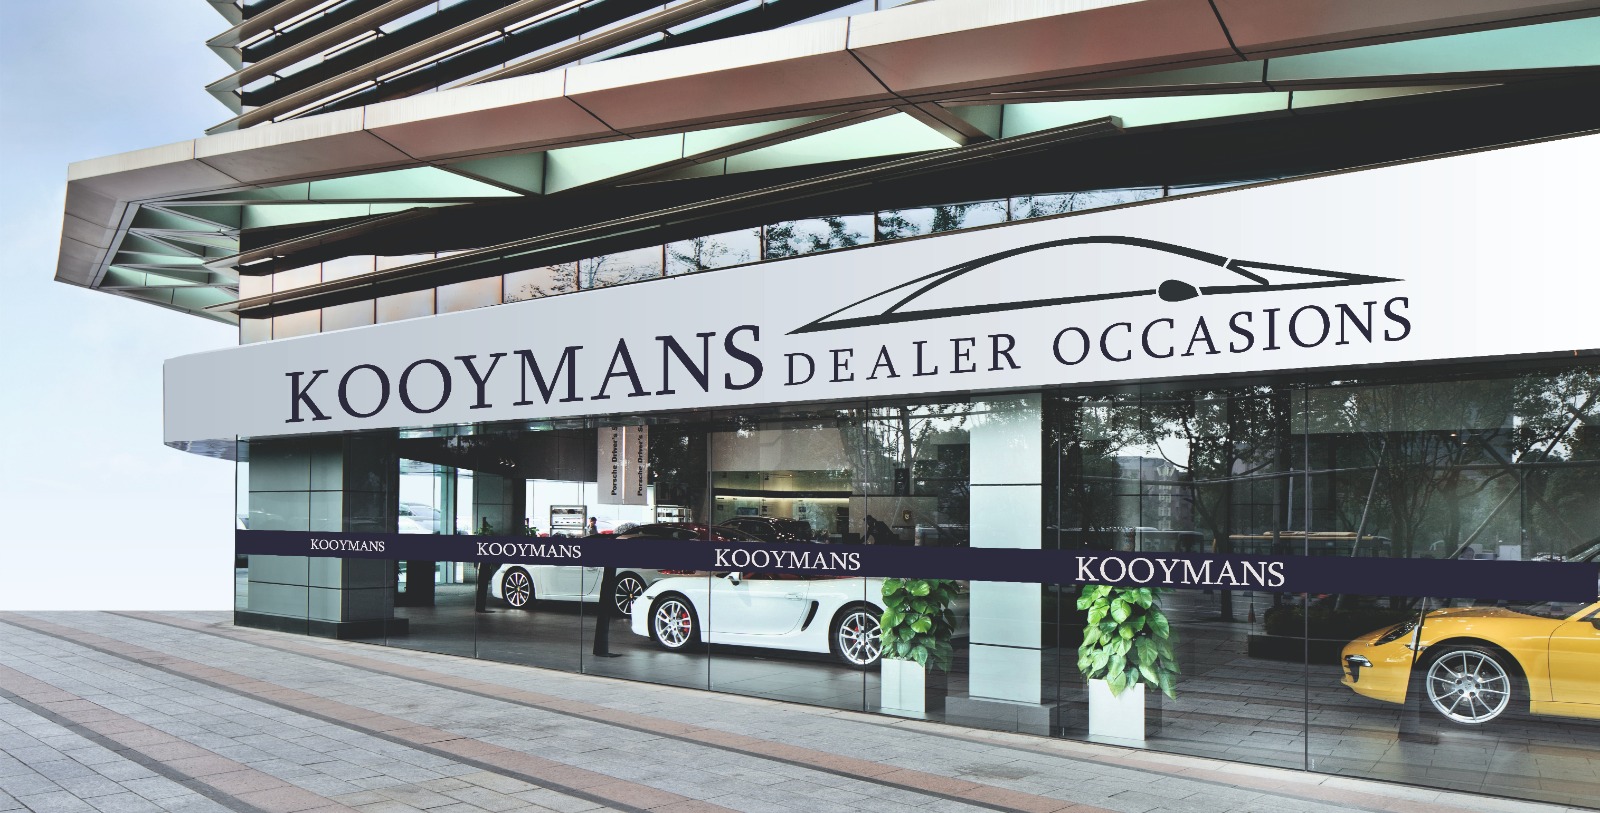 Kooymans Dealer Occasions